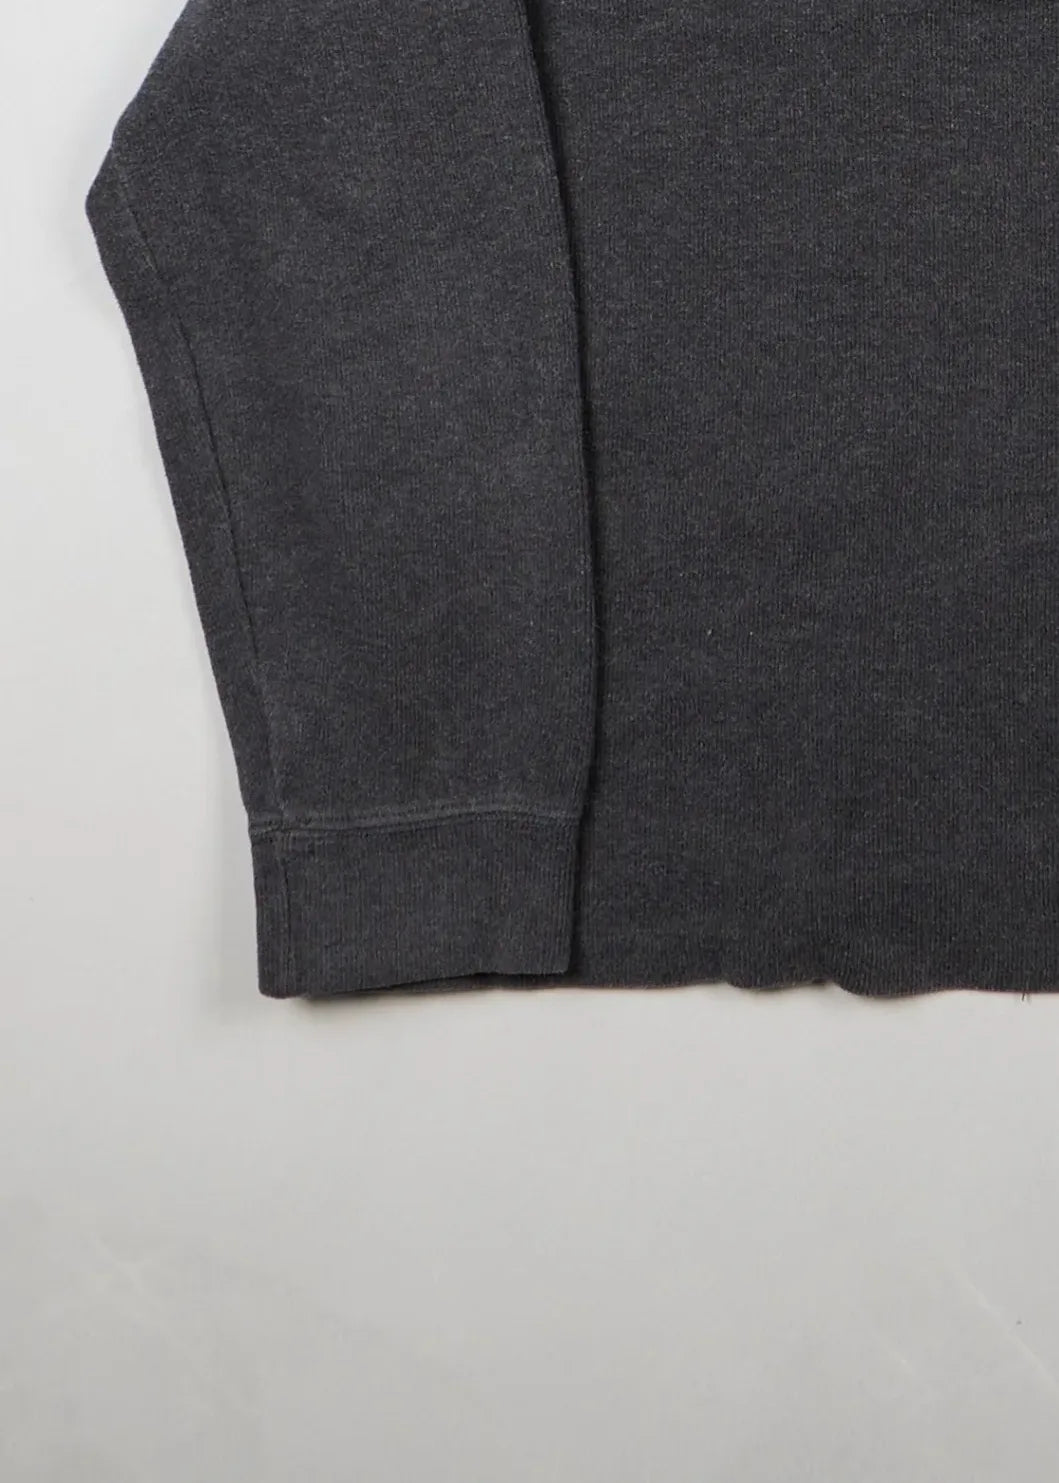 Ralph Lauren - Sweater (L) Bottom Left